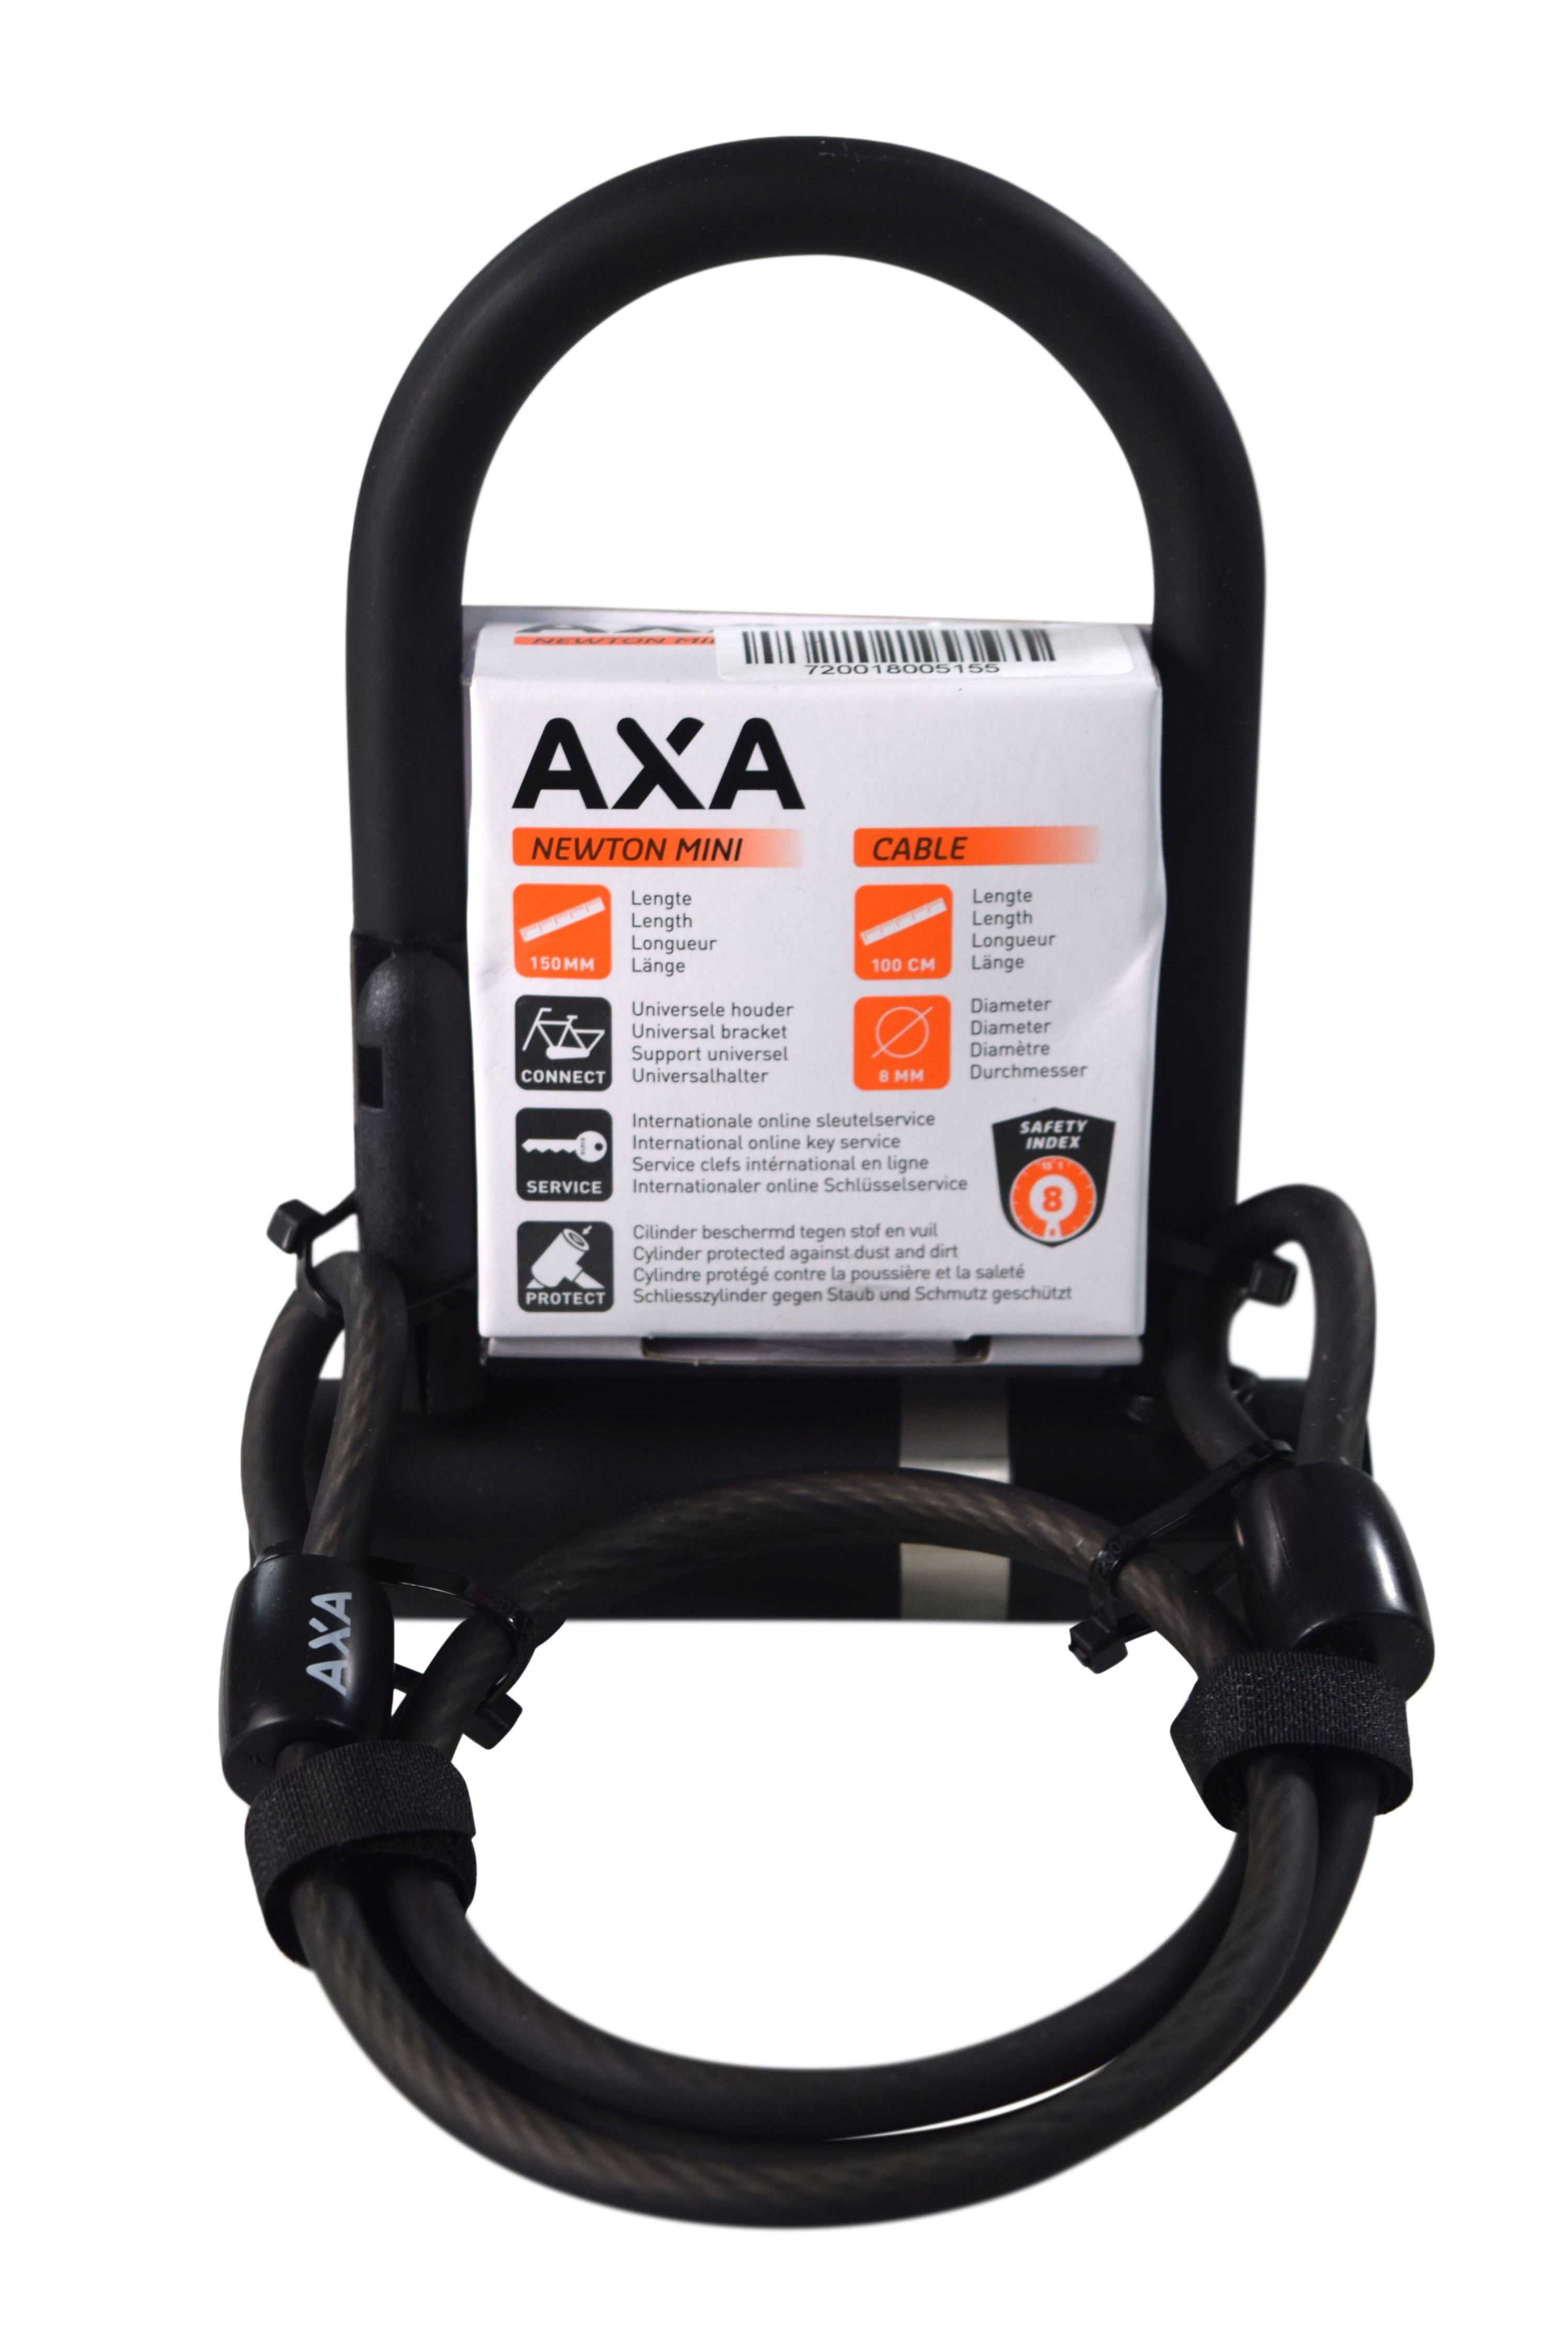 AXA-005155-Newton-Mini-Cable-100-8-w-Mounting-Bracket-U-Lock-image-4